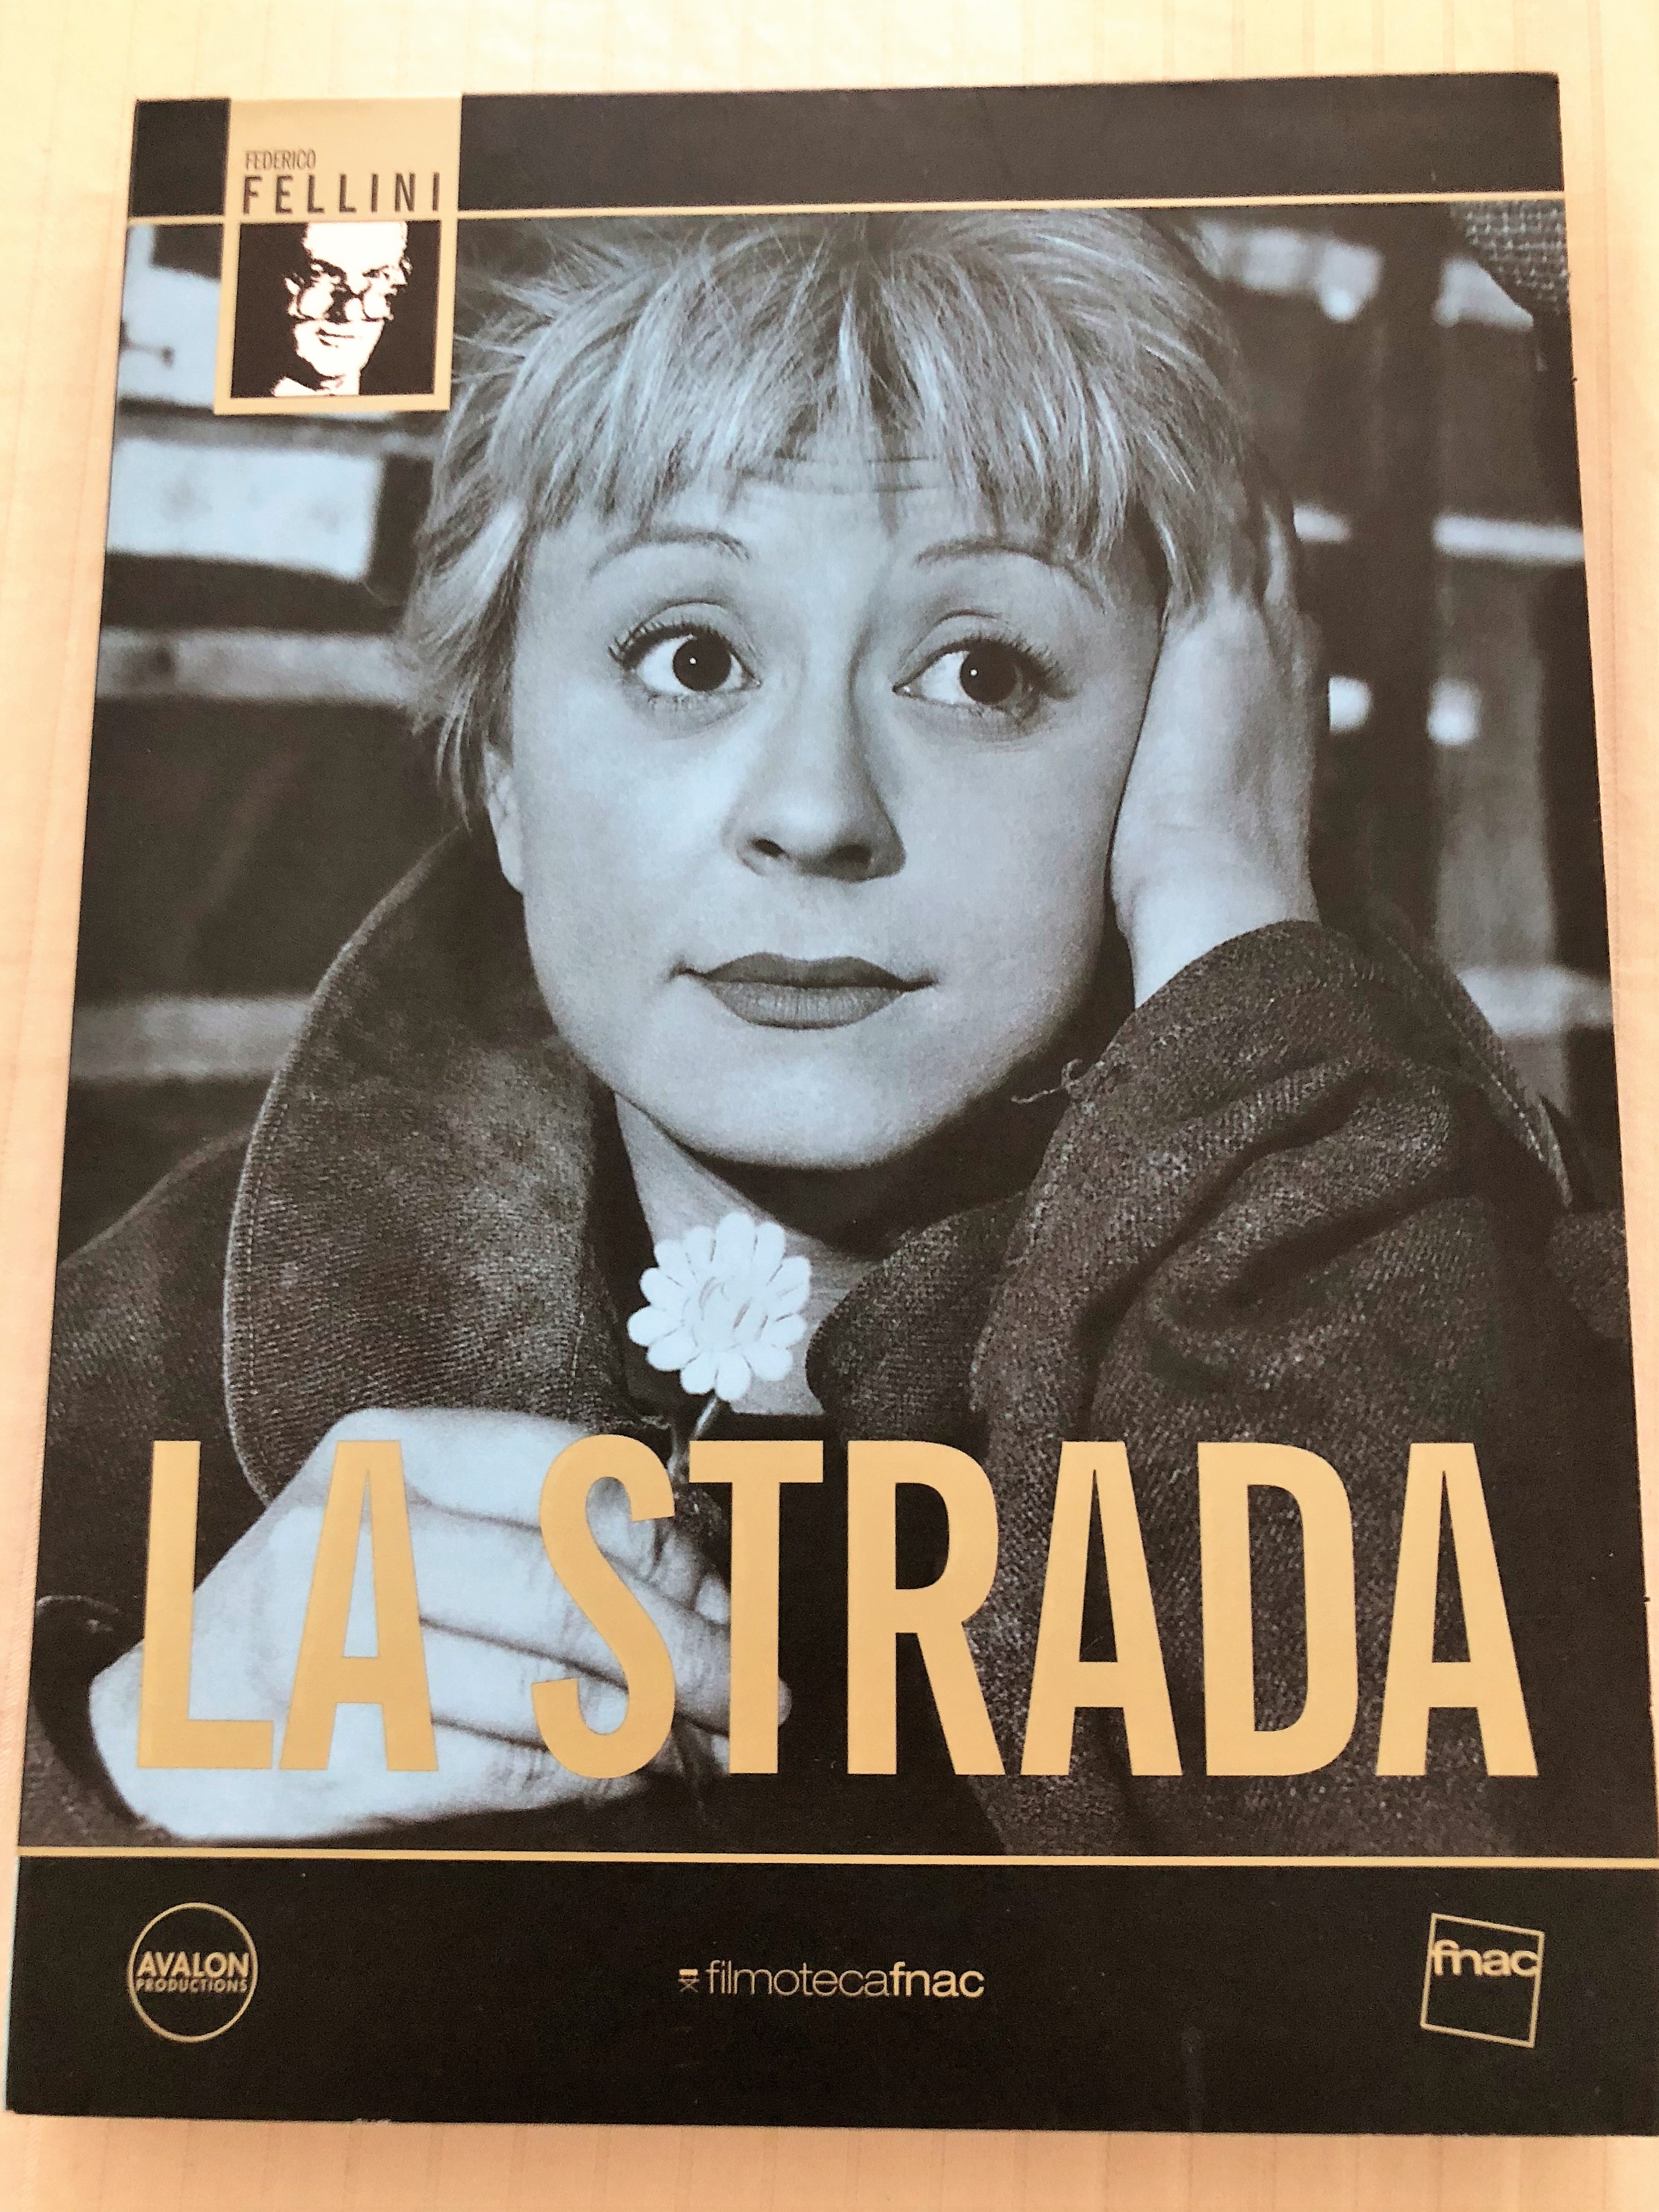 La Strada 2x DVD 1954 The Road / Directed by Federico Fellini / Starring:  Giulietta Masina, Anthony Quinn, Richard Basehart / Spanish DVD Release -  Bible in My Language